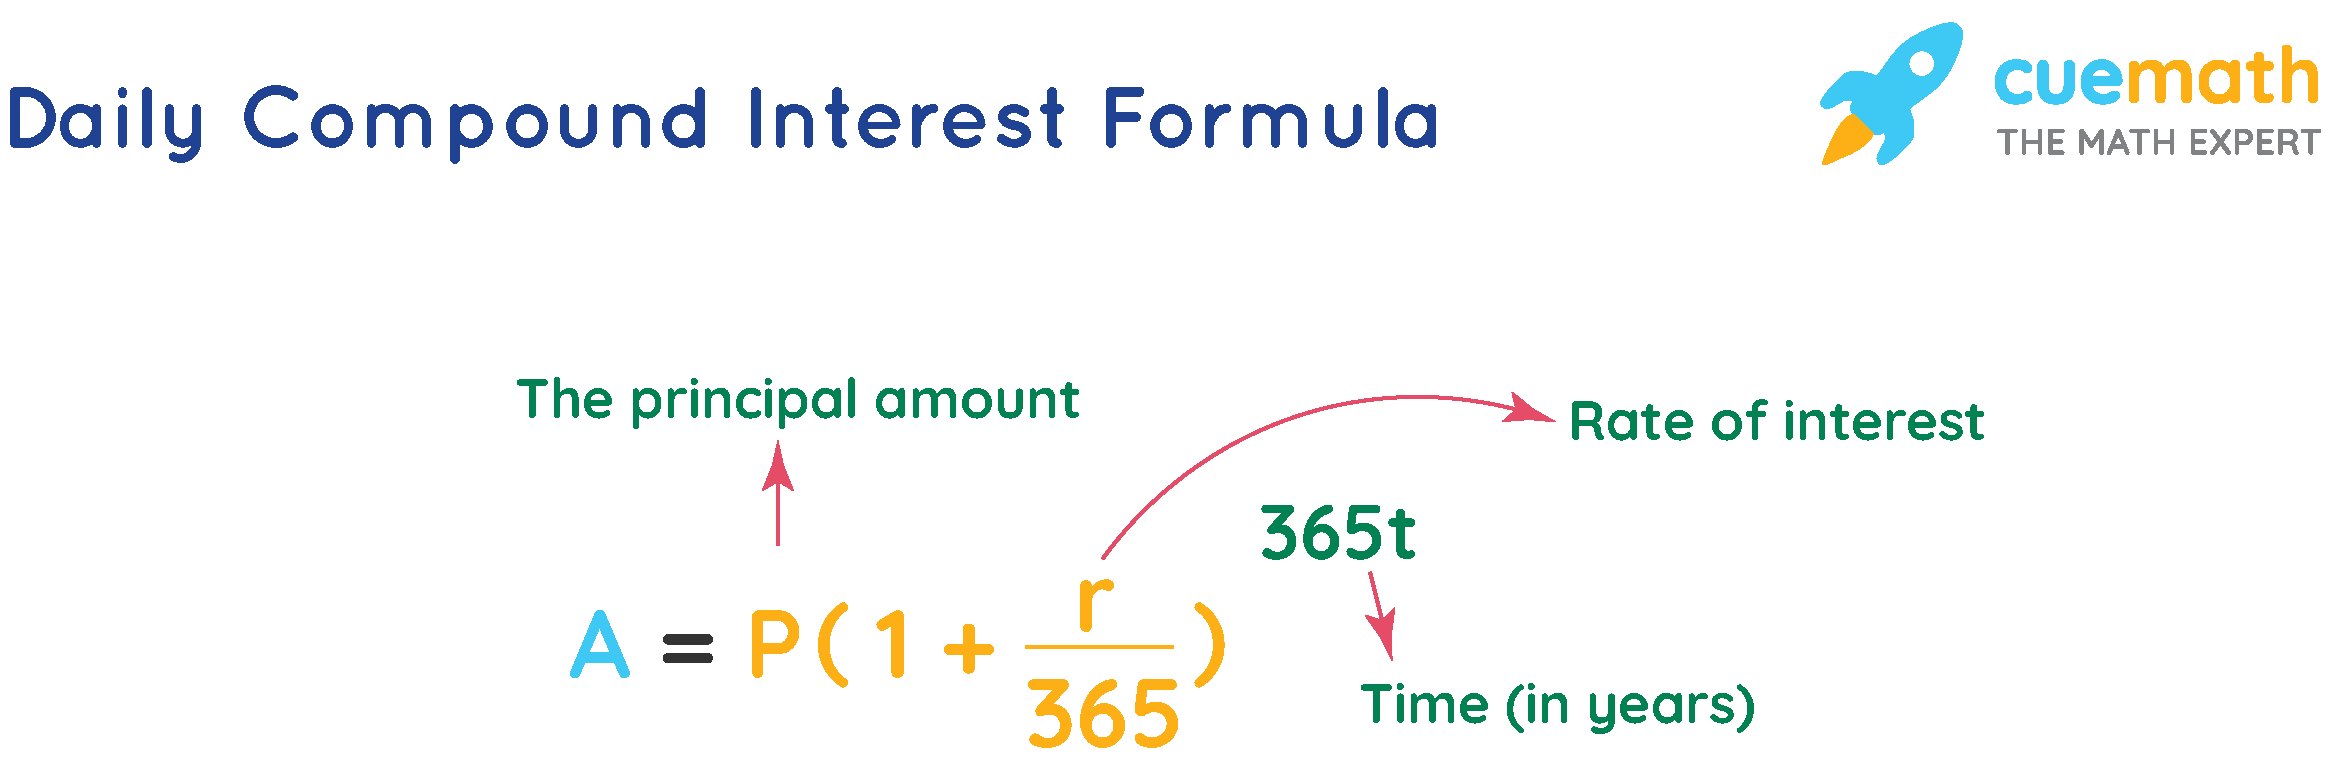 Simple Interest Calculator - Calculate Simple Interest (Principal + Interest) Online